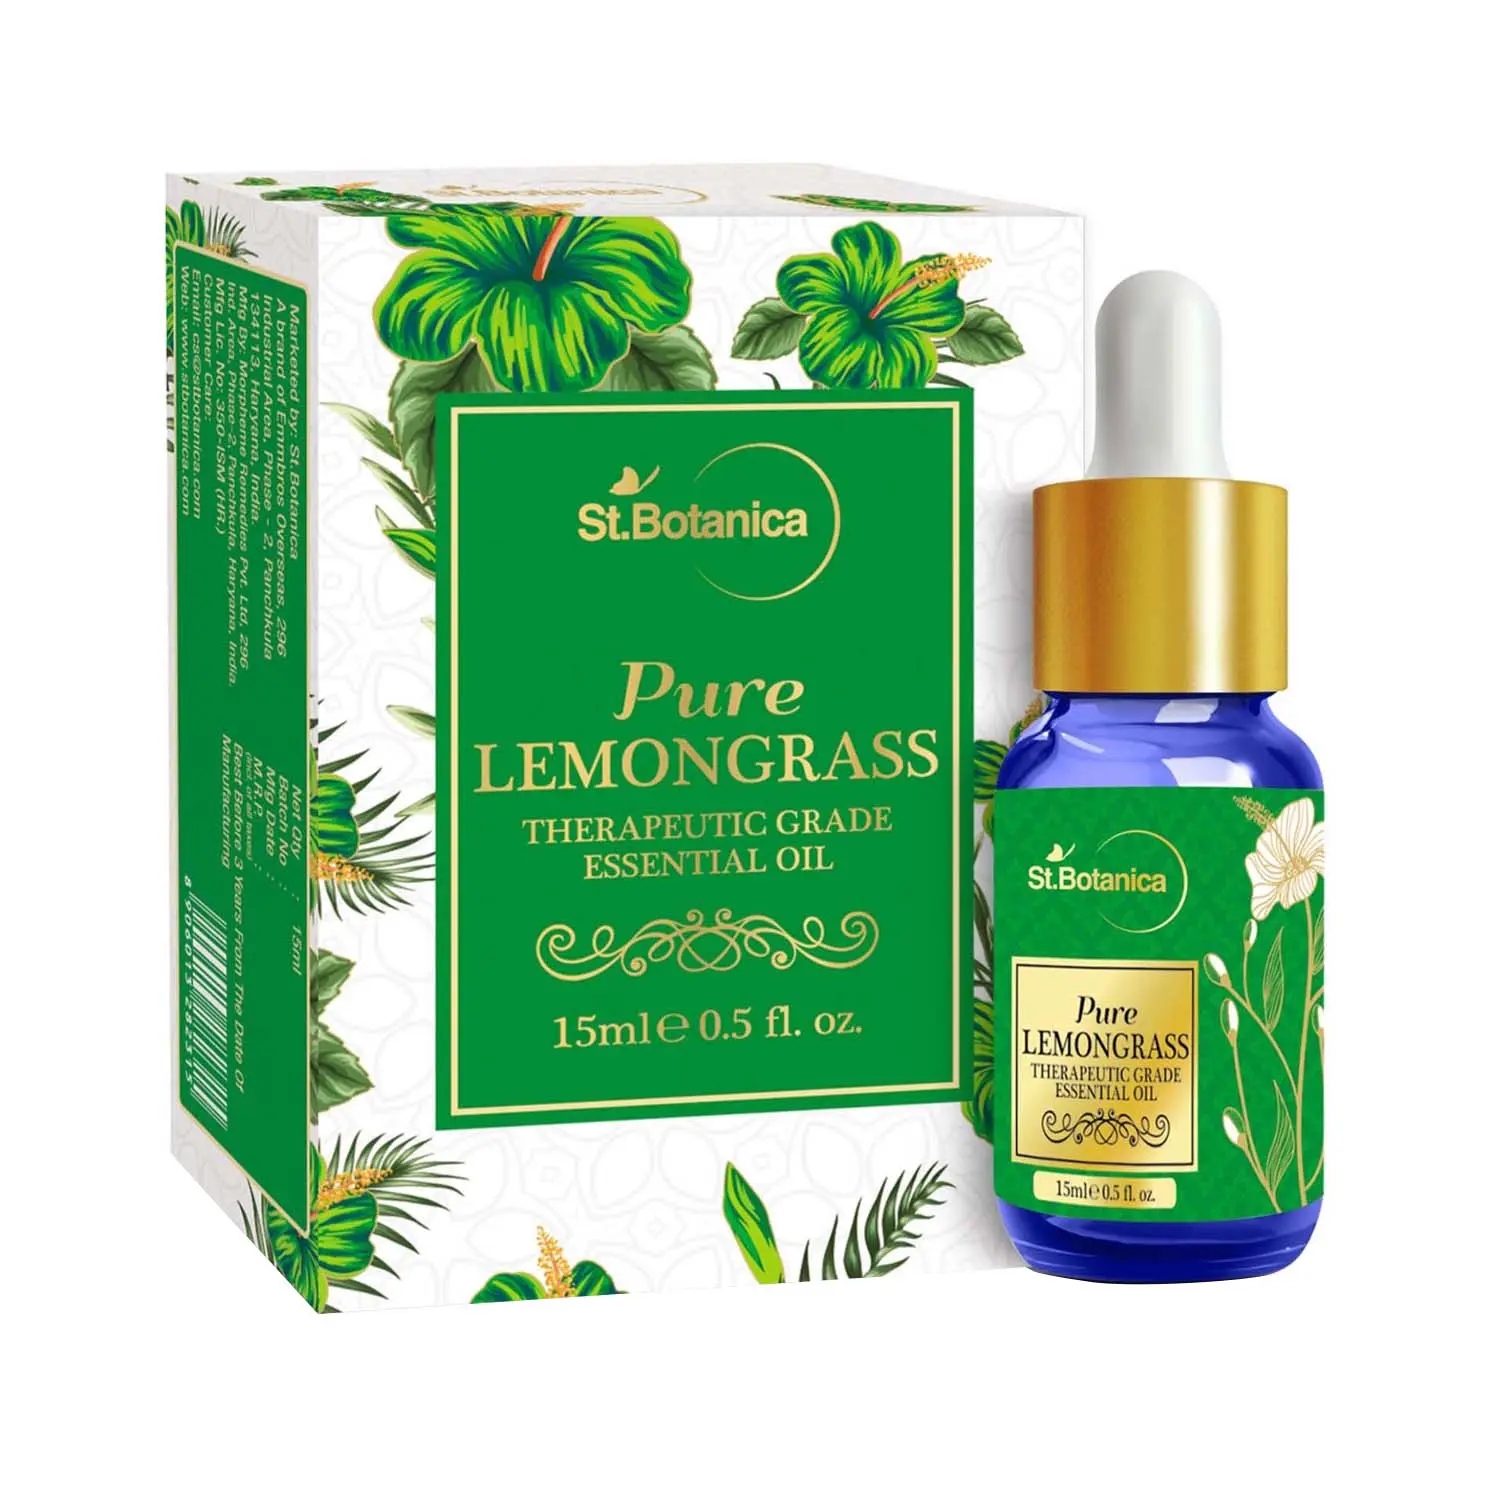 St.Botanica | St.Botanica Pure Lemongrass Essential Oil (15ml)